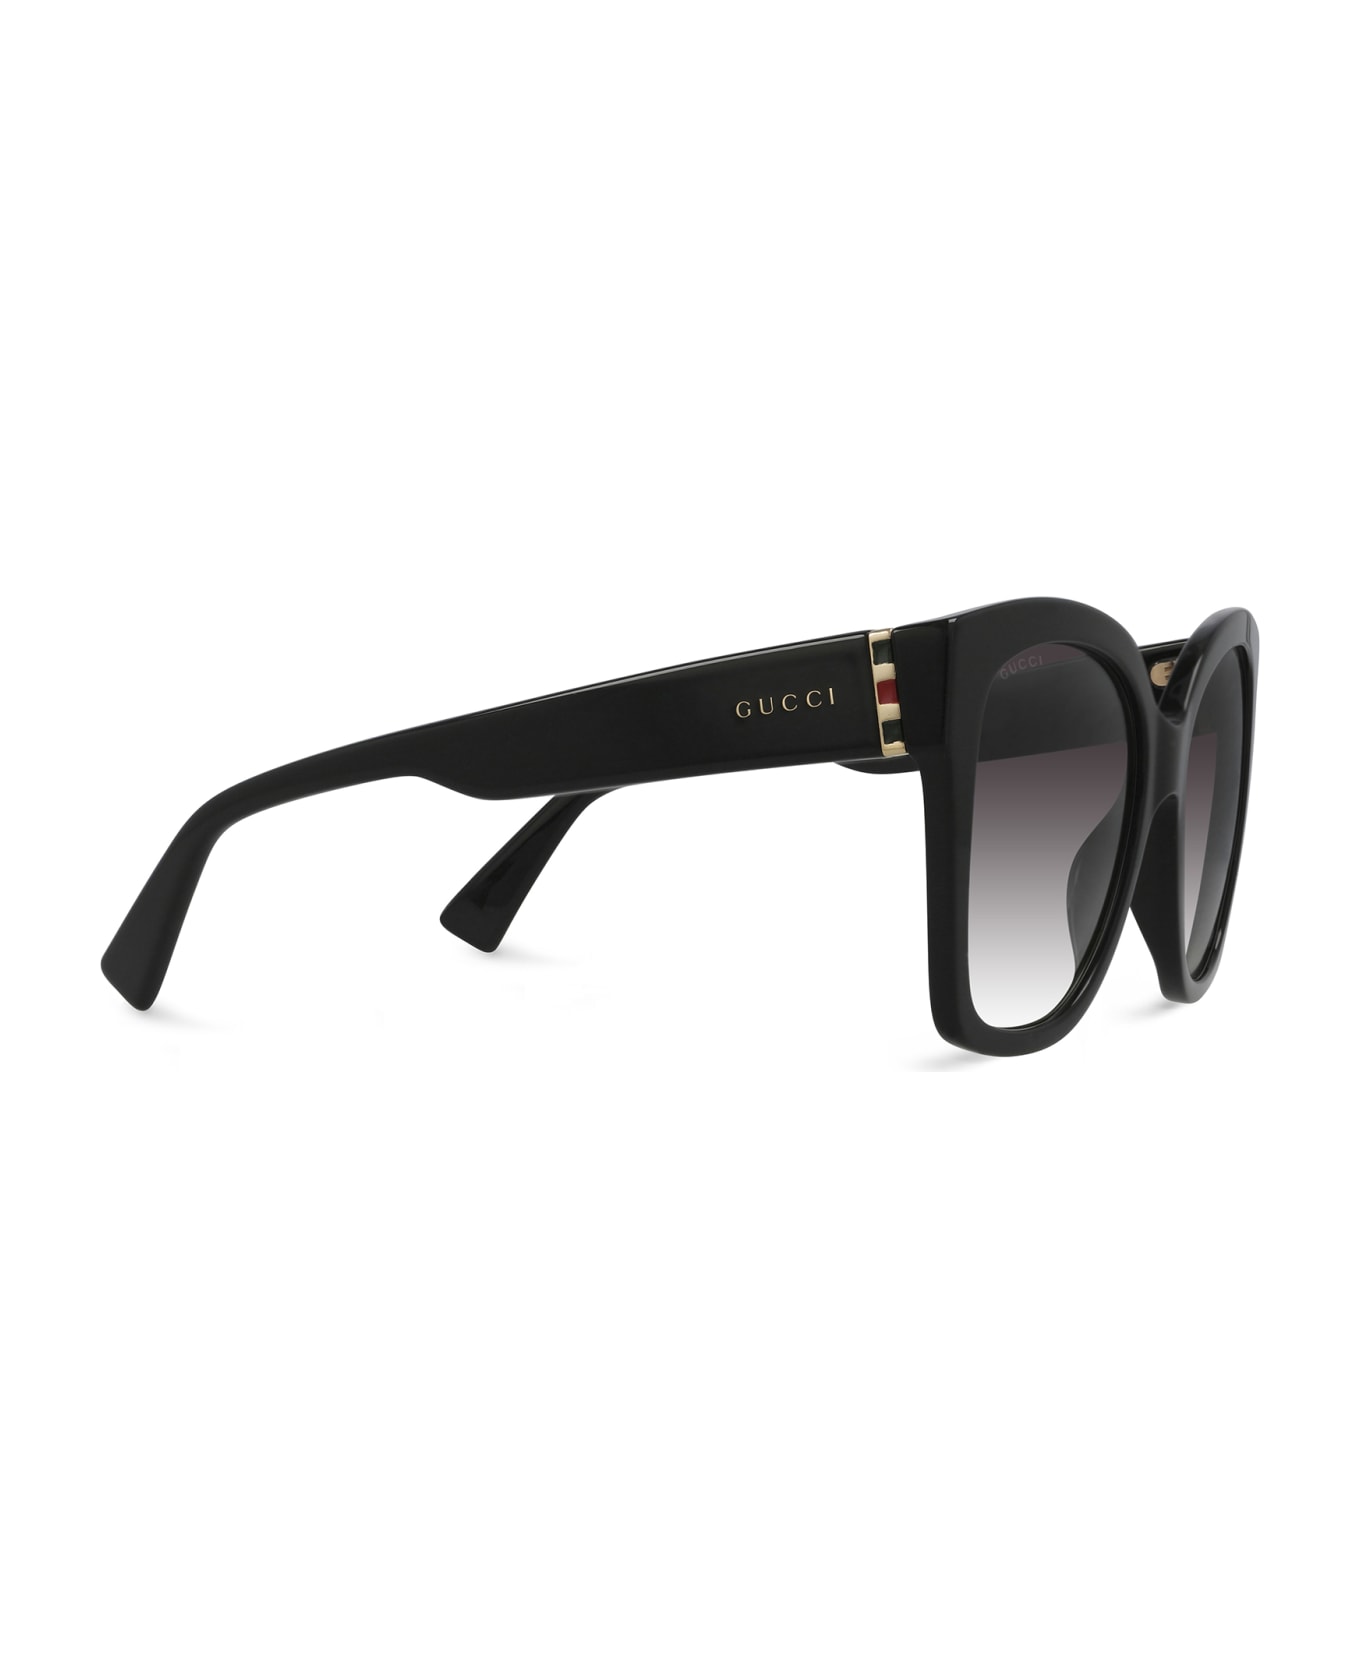 Gucci Eyewear Gg0459s Black Sunglasses - Black